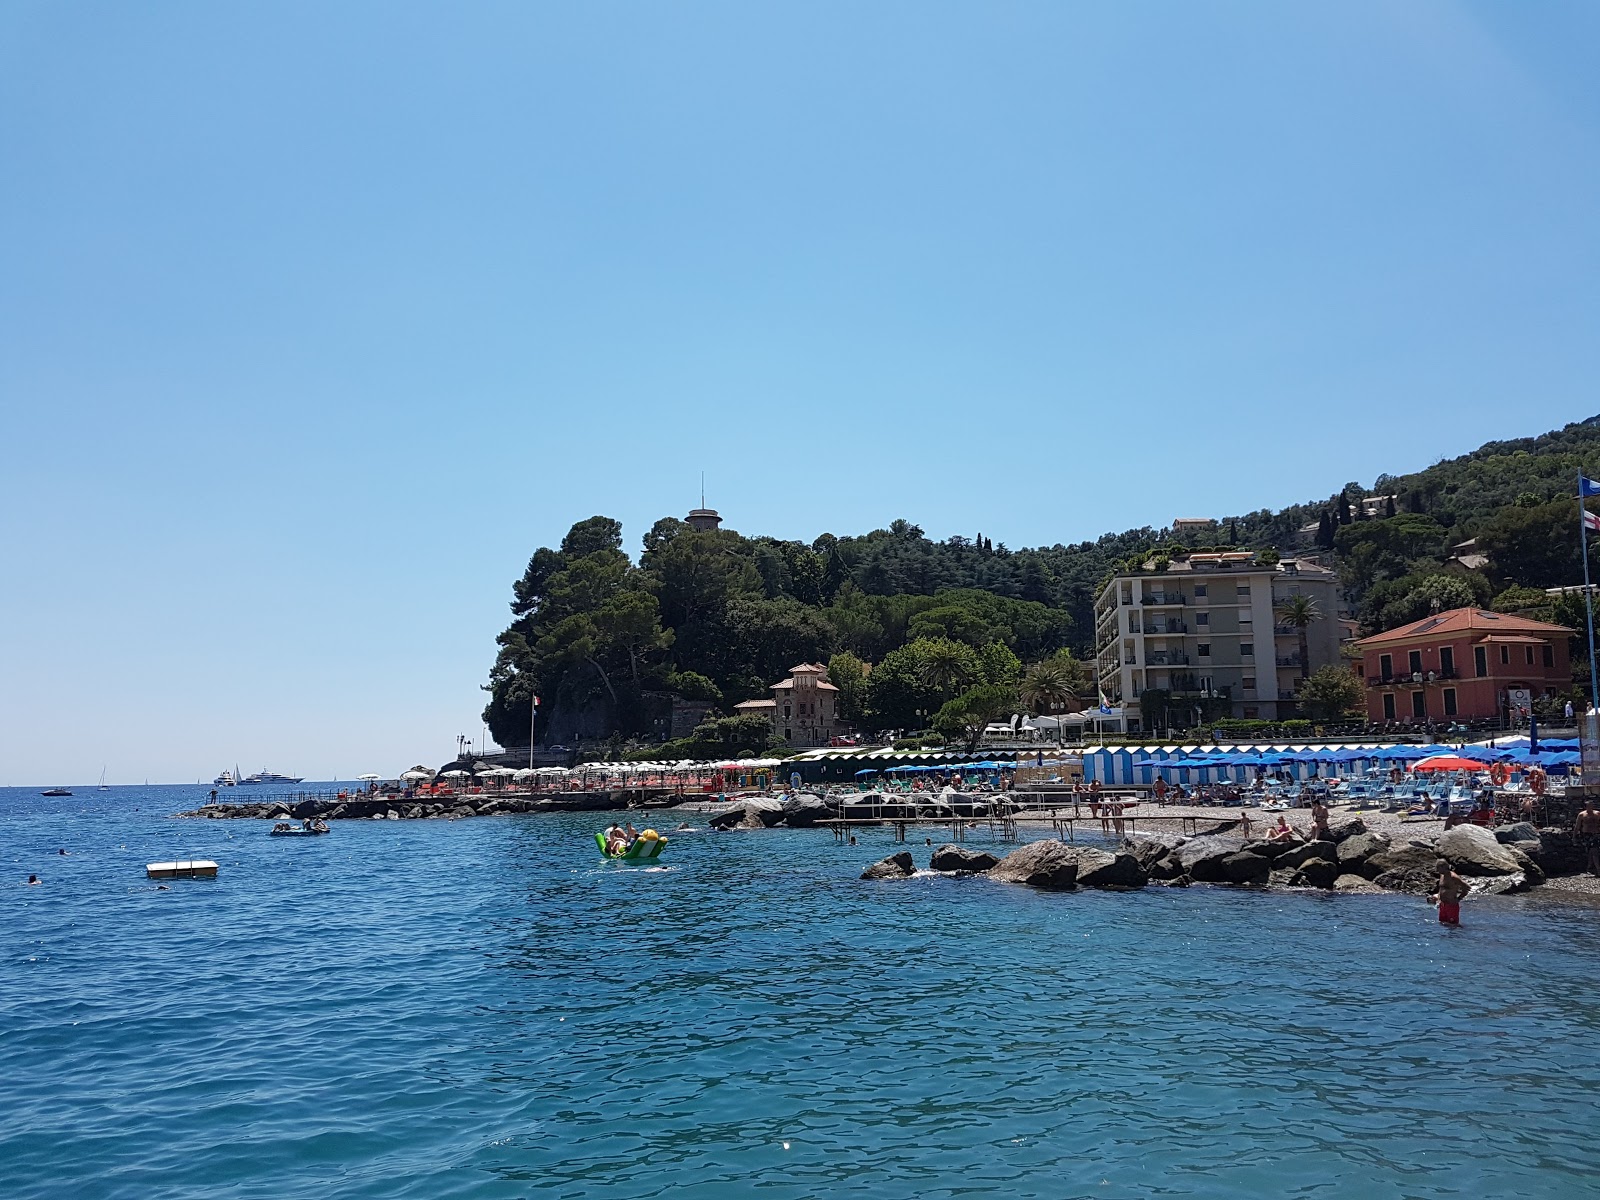 Photo of Spiaggia Santa Margherita Ligure and the settlement